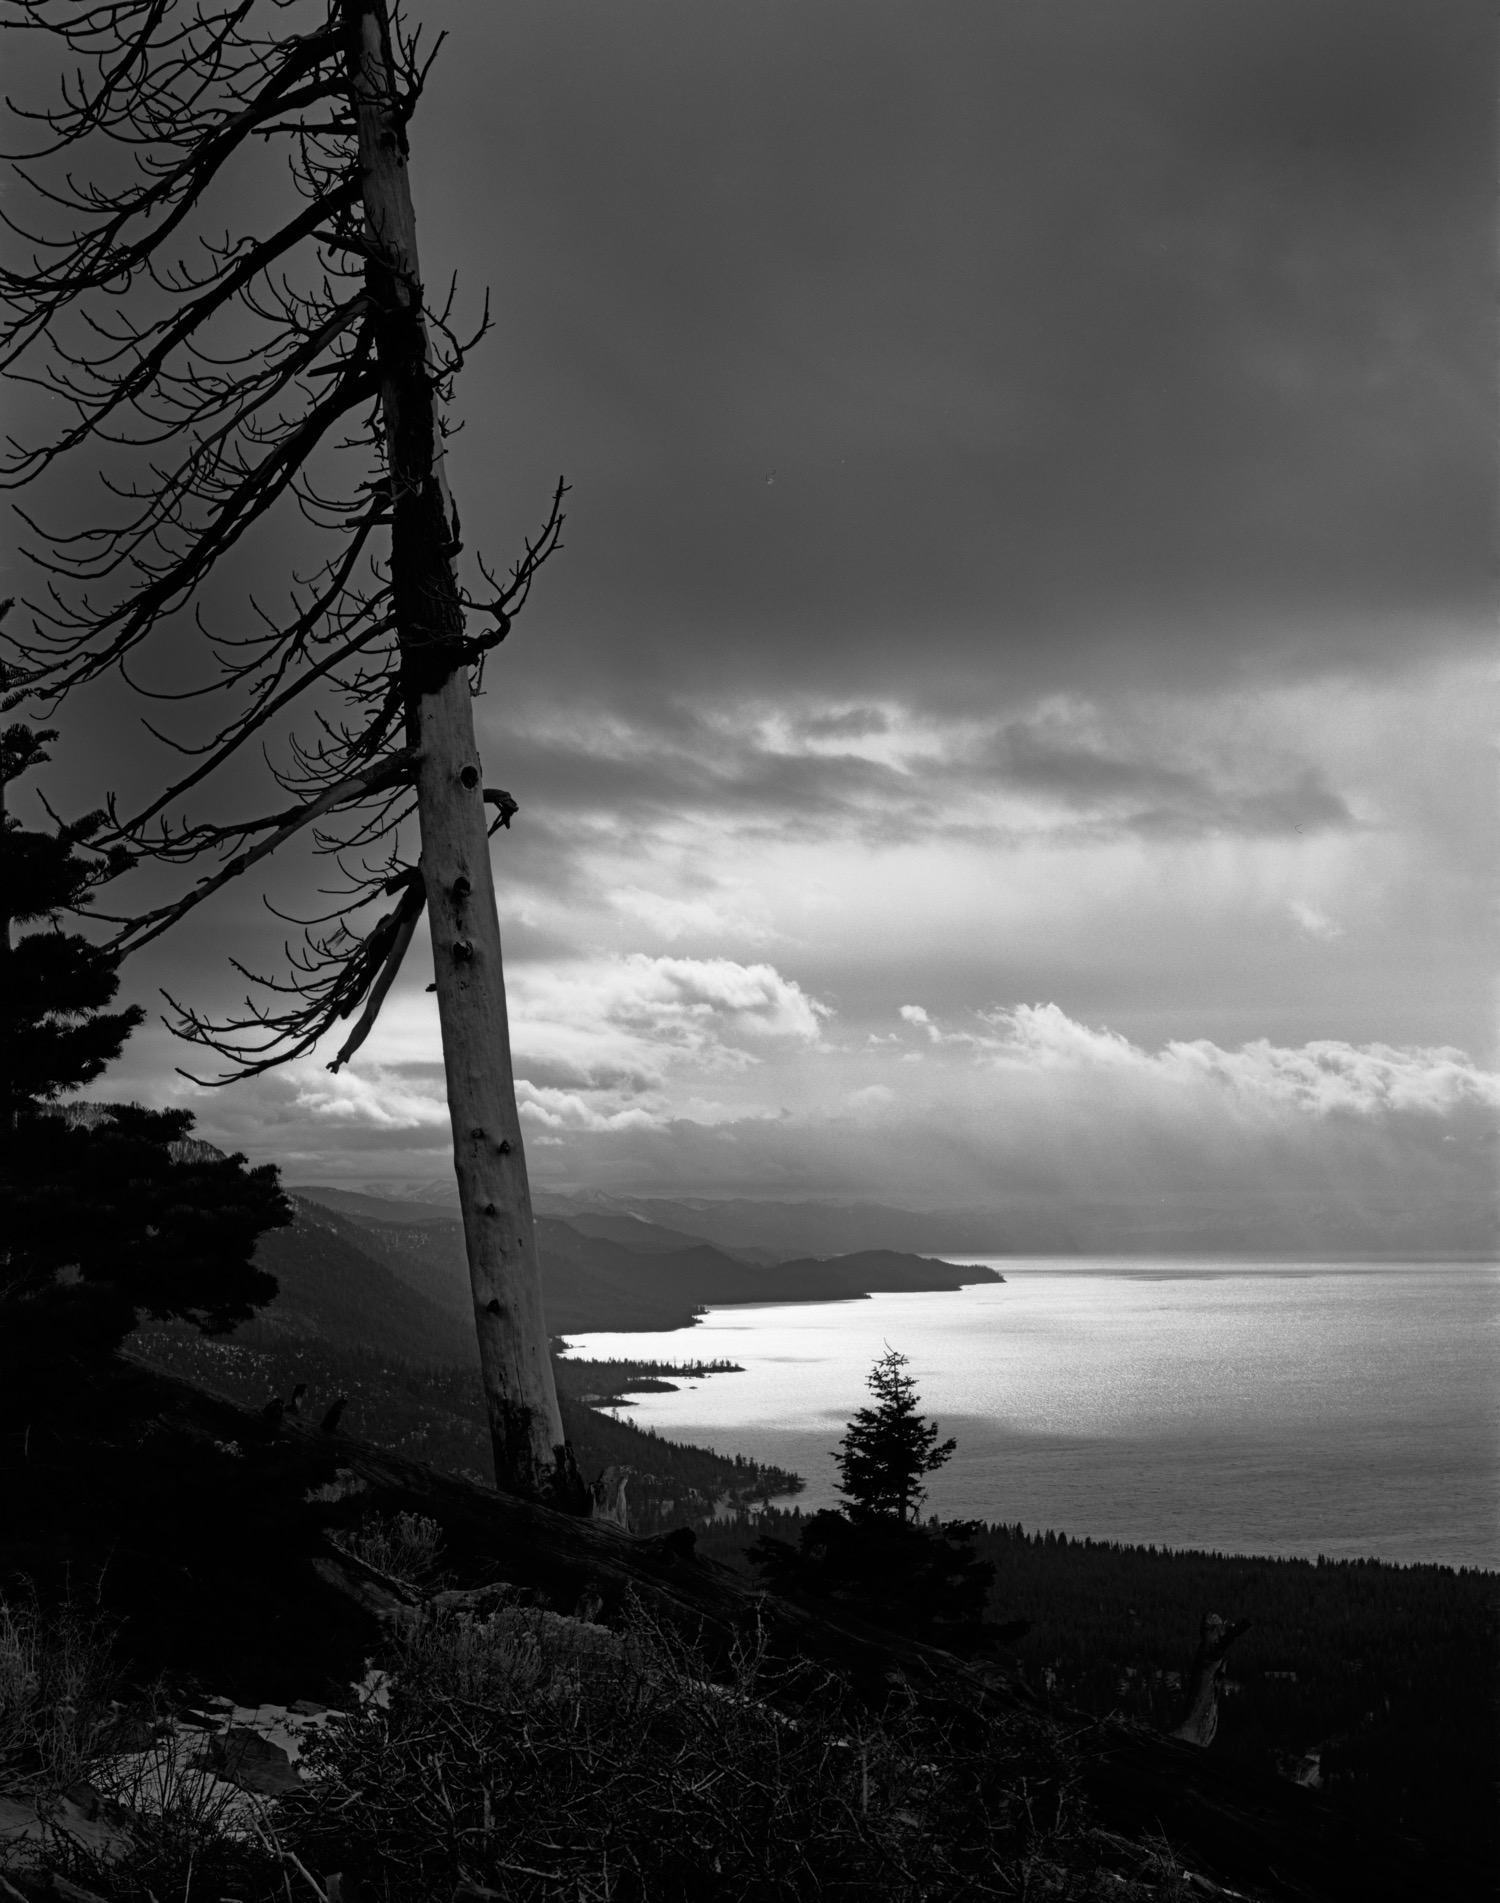 Storm over Tahoe
November 4, 1978